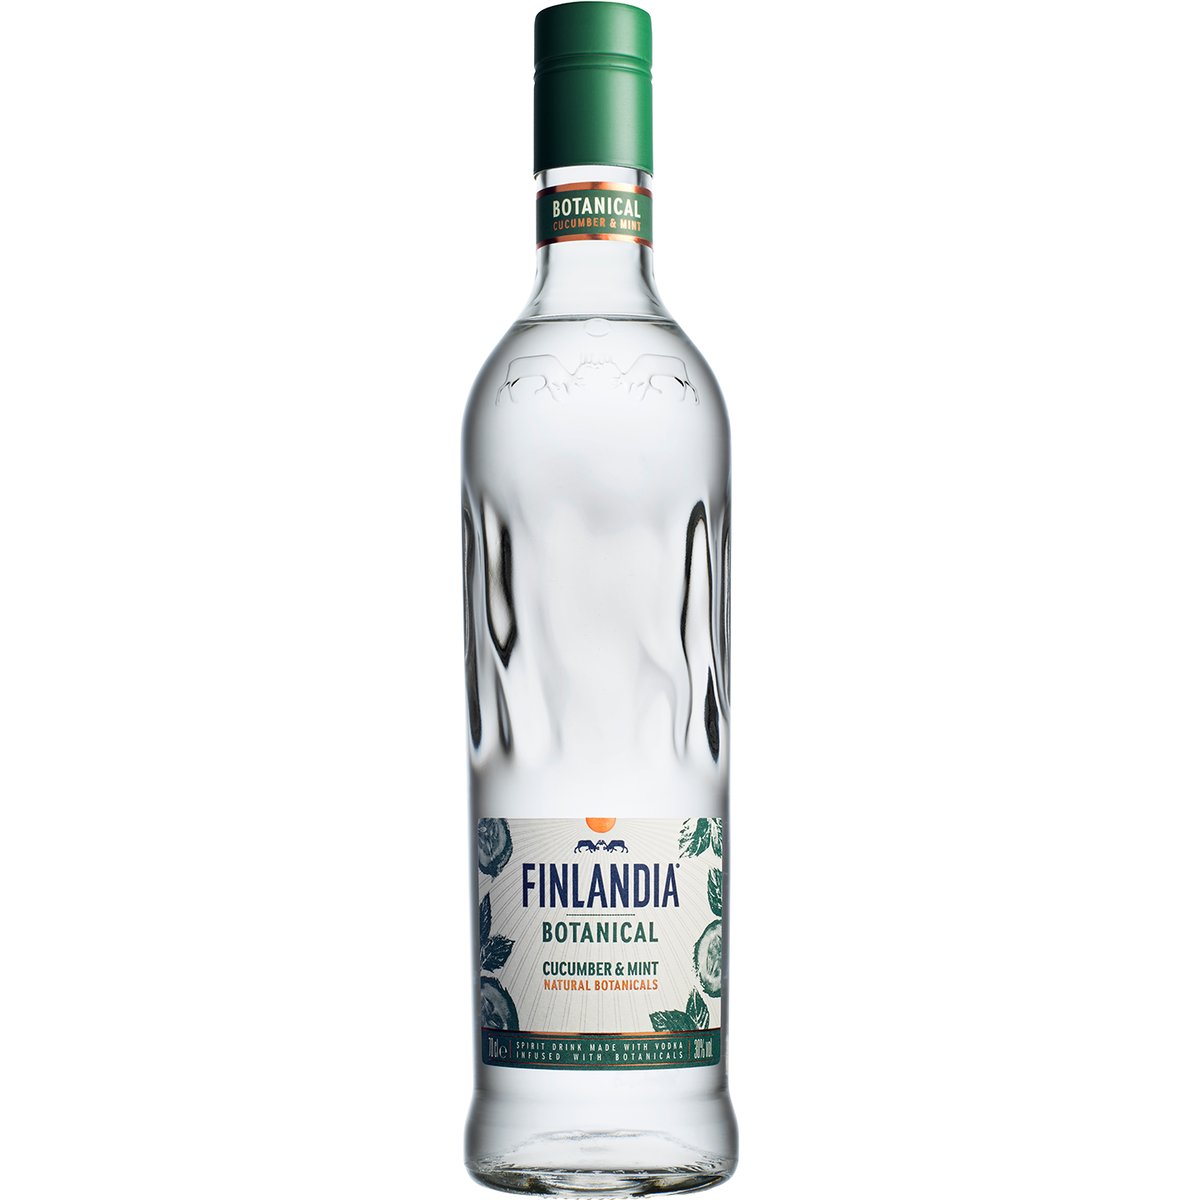 Finlandia Botanical Okurka a máta vodka 30% v akci